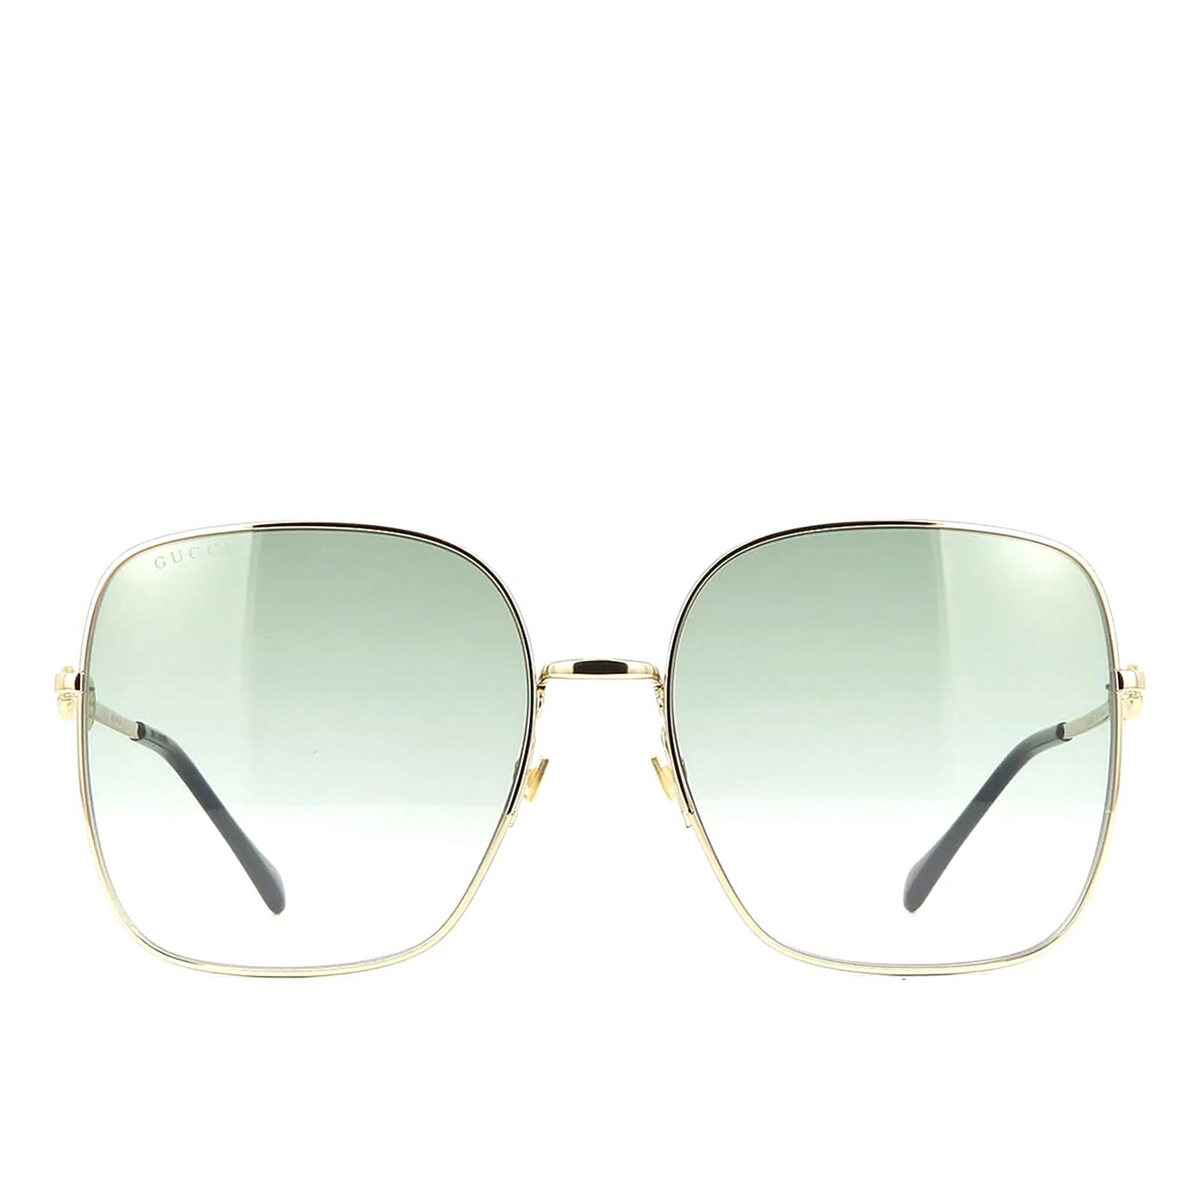 Gucci® Square Sunglasses: GG0879S color Gold 003 - front view.